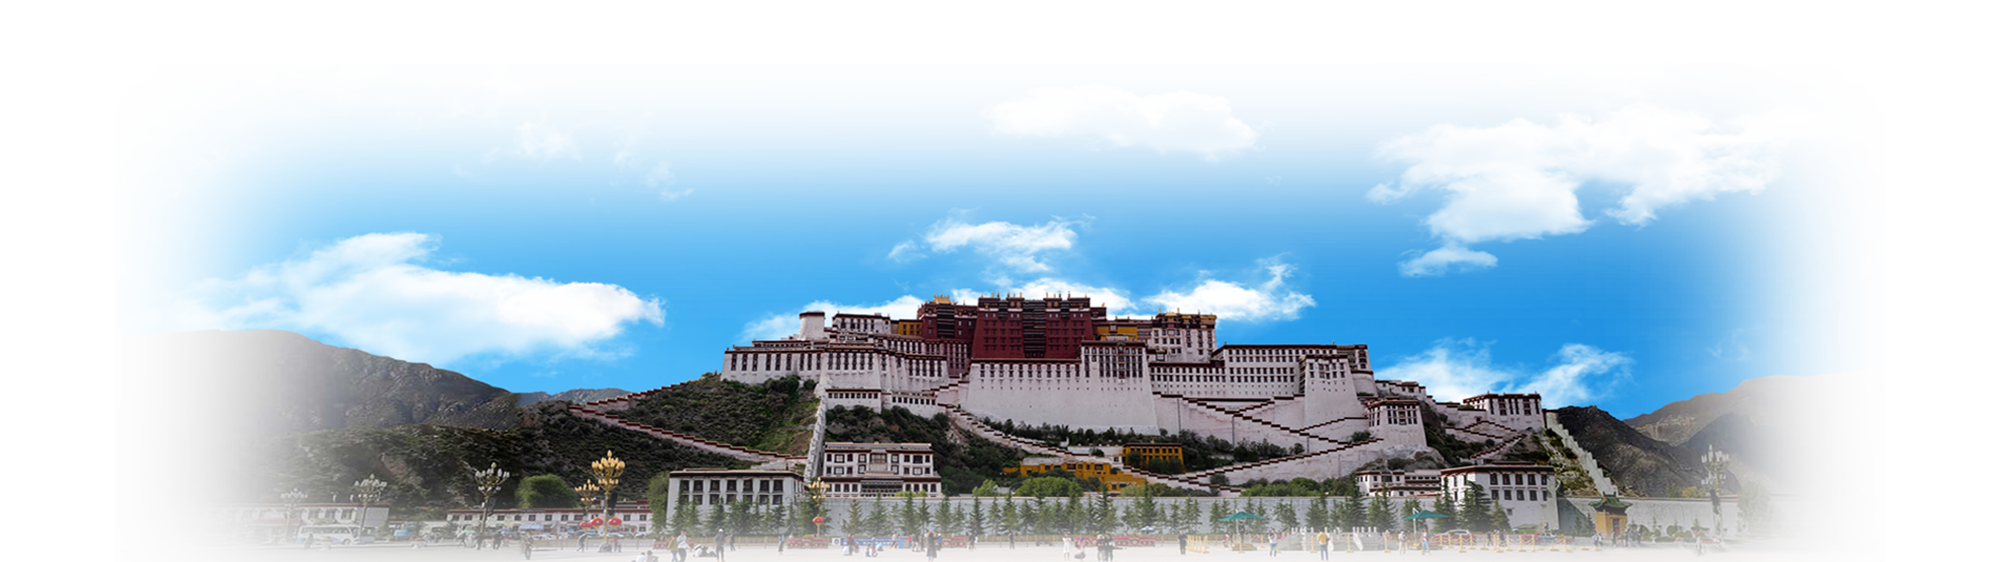 Dolgyal (Shugden) - Central Tibetan Administration